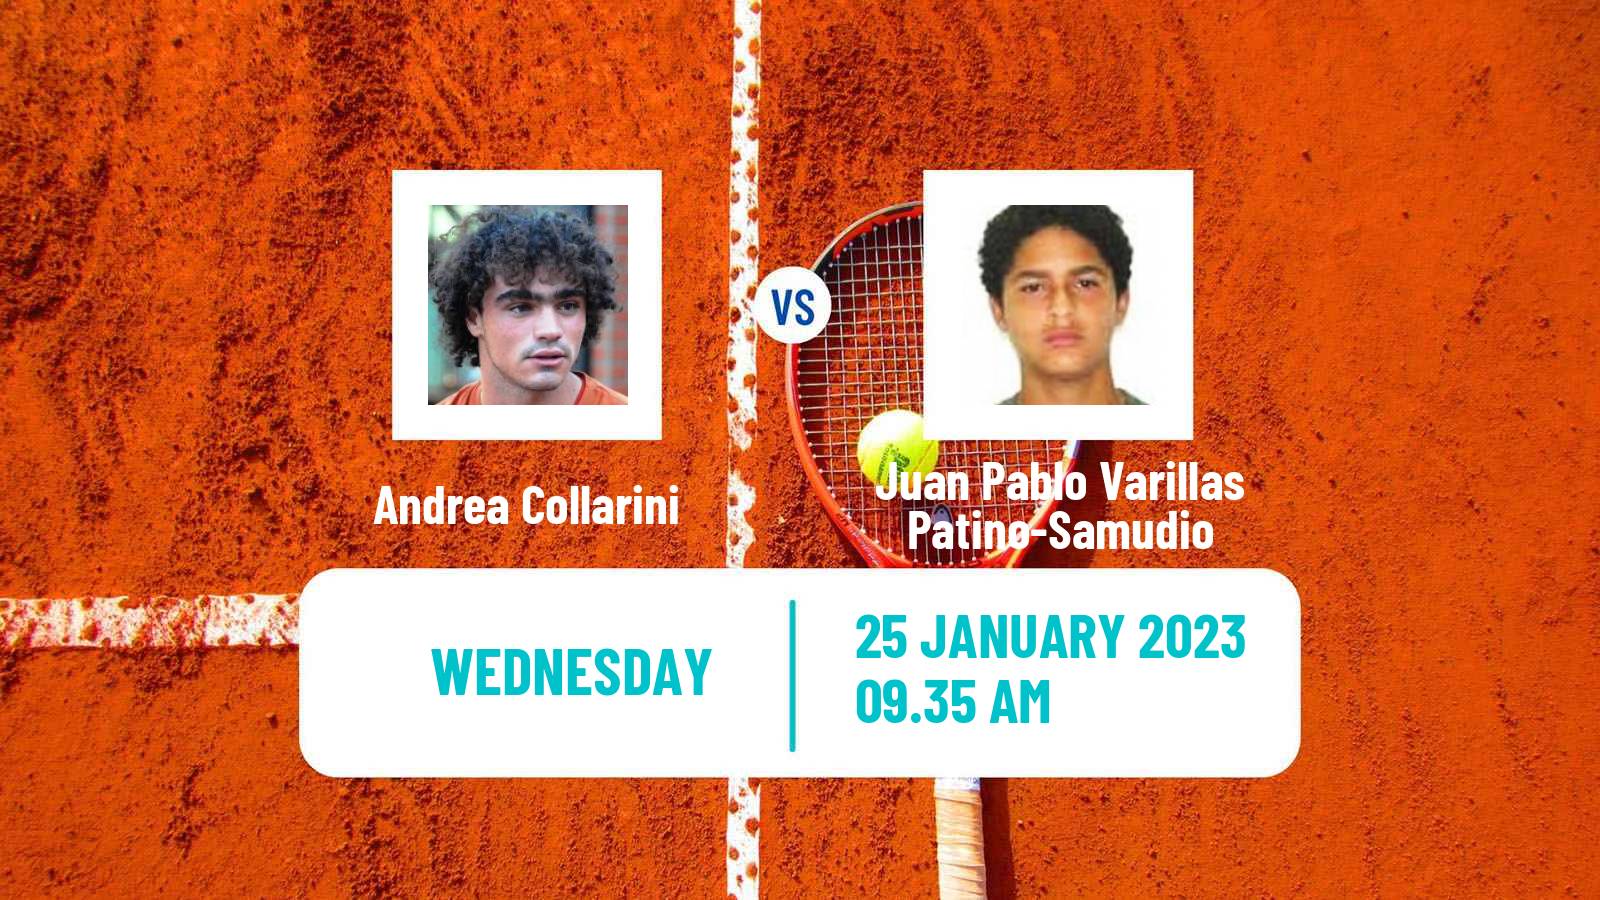 Tennis ATP Challenger Andrea Collarini - Juan Pablo Varillas Patino-Samudio